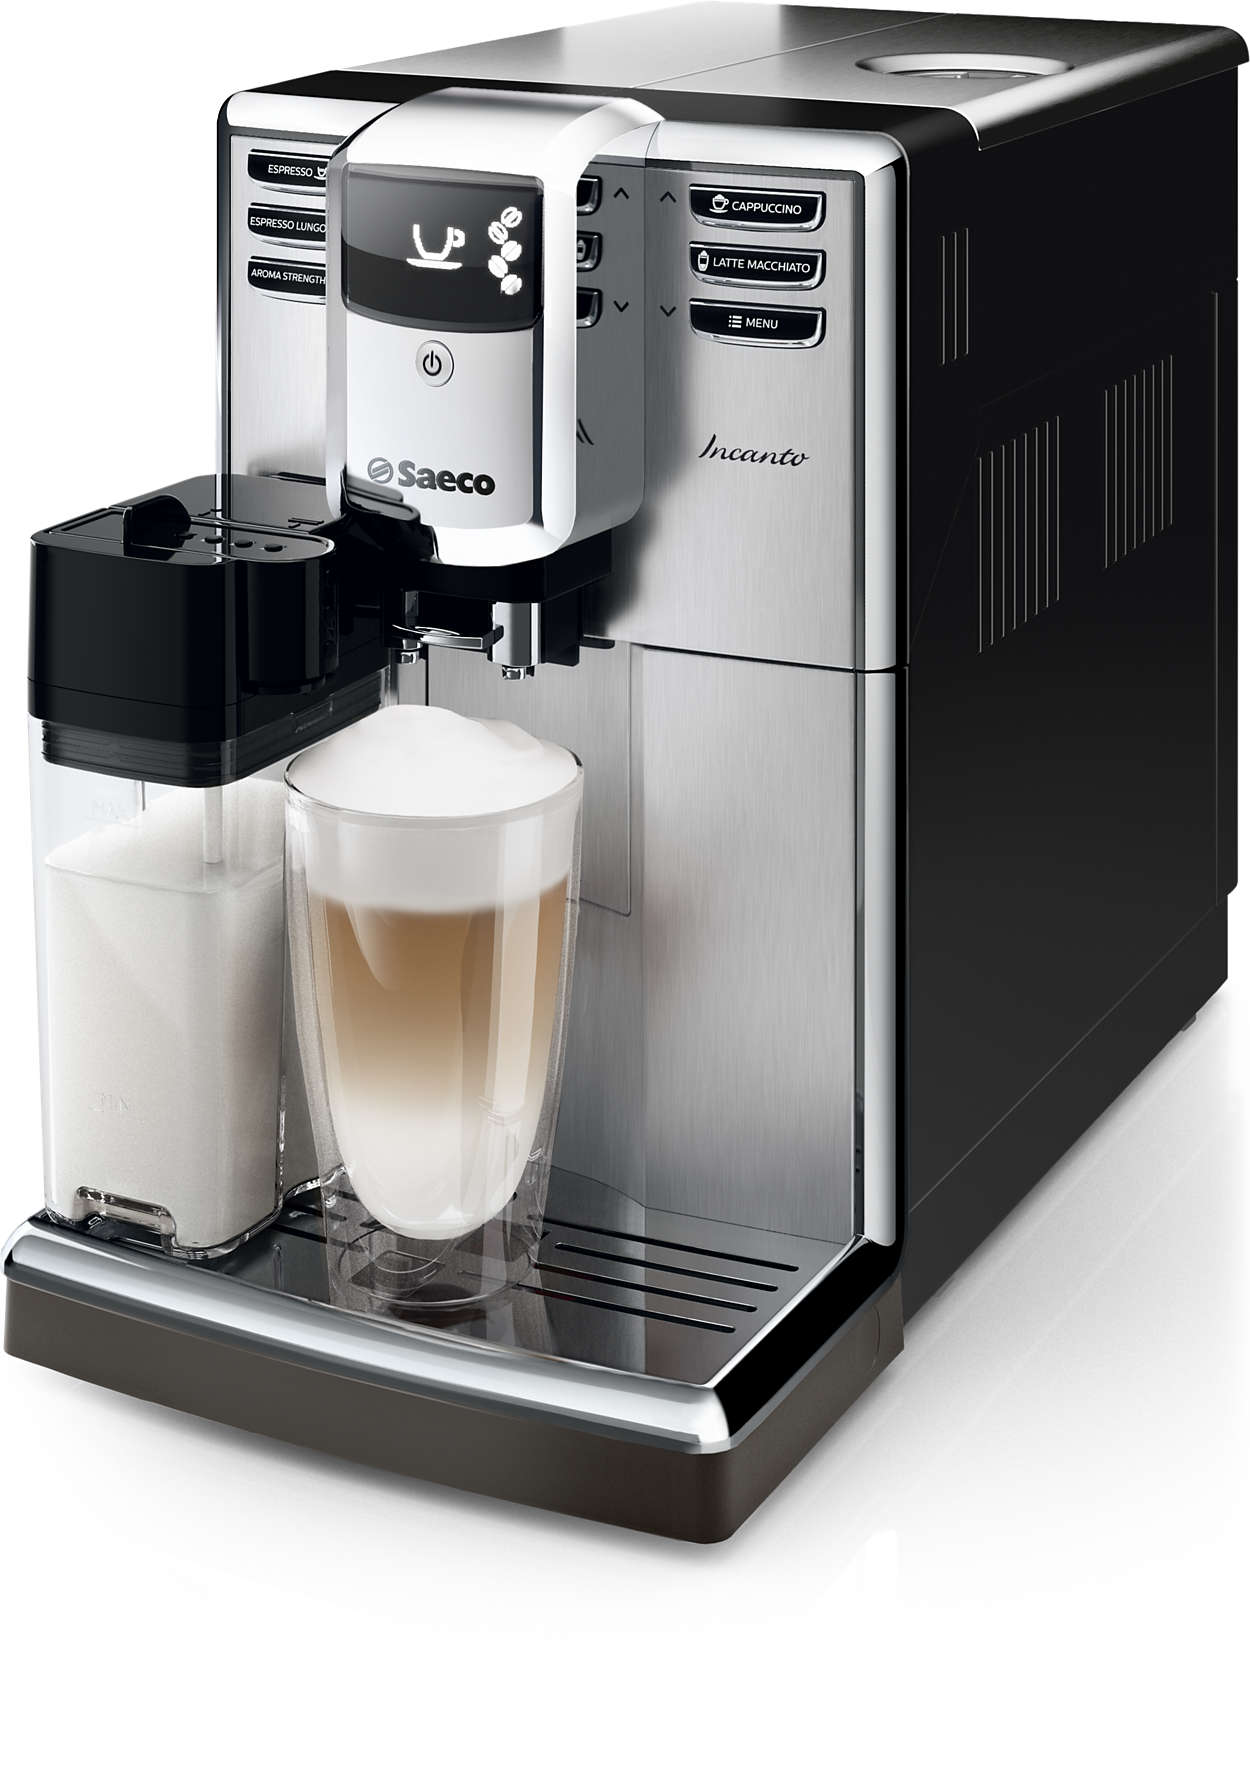 bearing murderer Transplant Incanto Super-automatic espresso machine HD8917/48 | Saeco